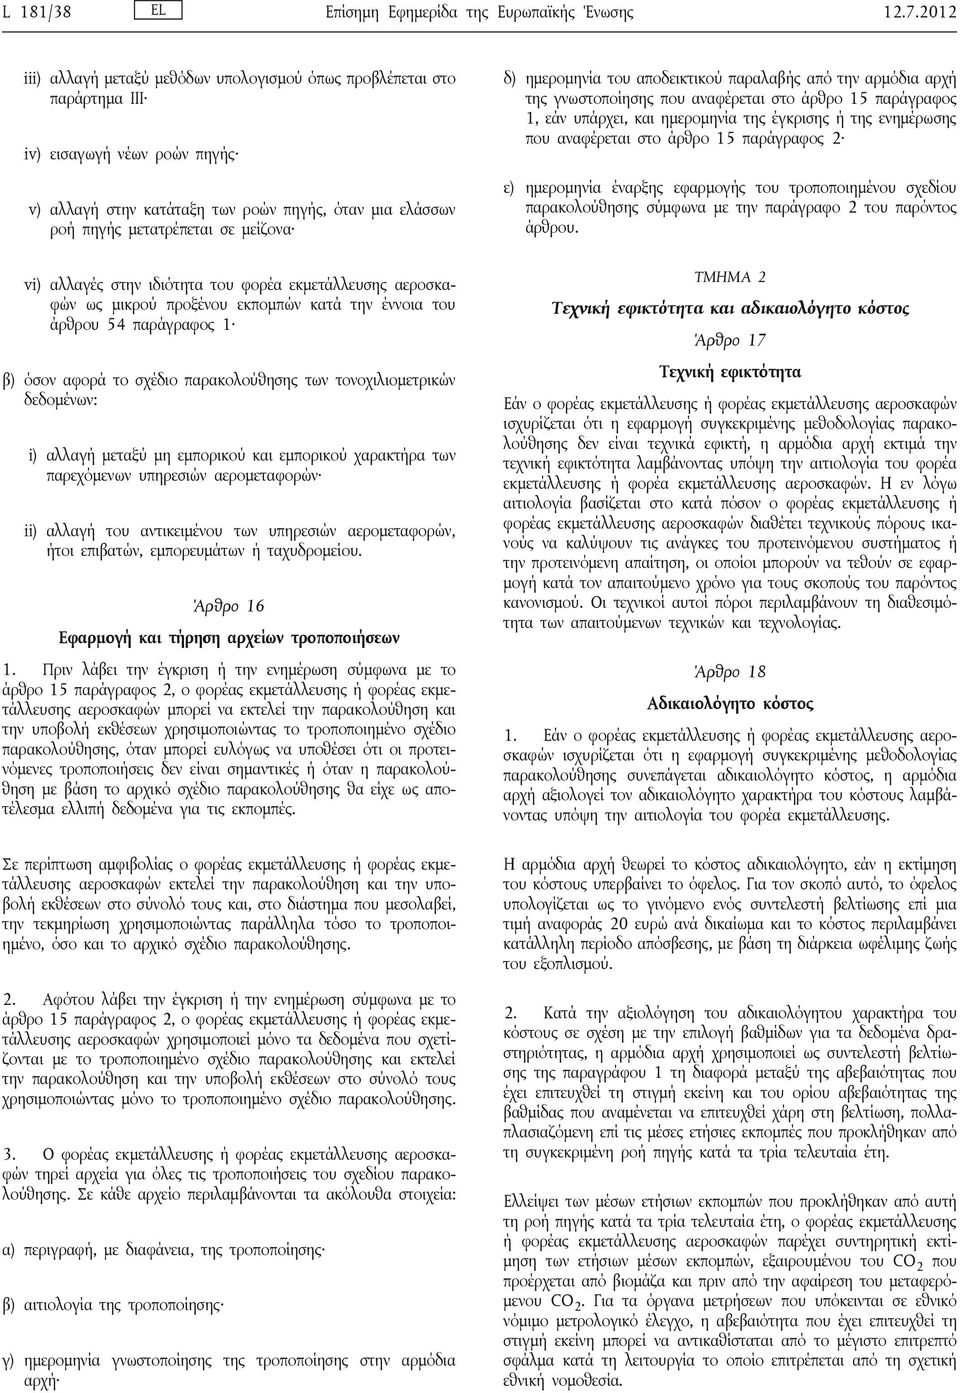 vi) αλλαγές στην ιδιότητα του φορέα εκμετάλλευσης αεροσκαφών ως μικρού προξένου εκπομπών κατά την έννοια του άρθρου 54 παράγραφος 1 β) όσον αφορά το σχέδιο παρακολούθησης των τονοχιλιομετρικών